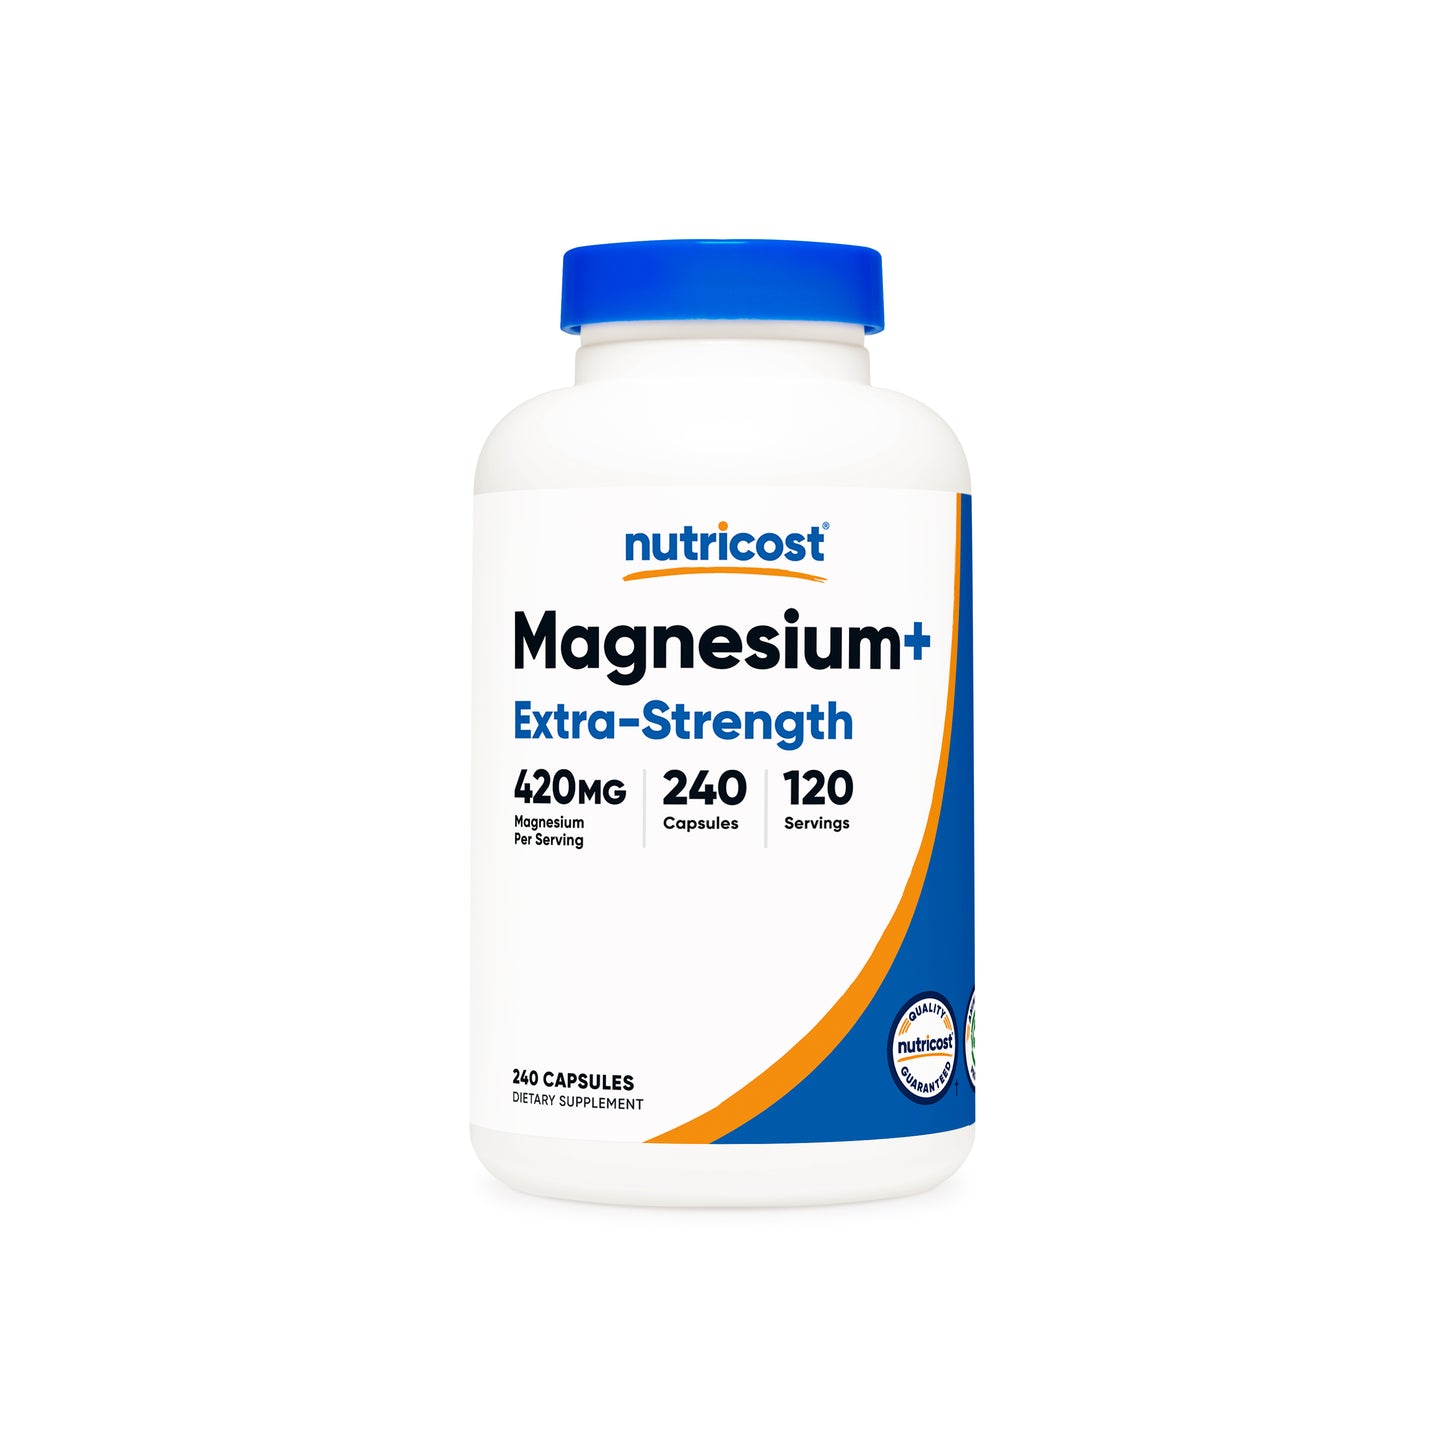 Nutricost Magnesium+ - Extra Strength